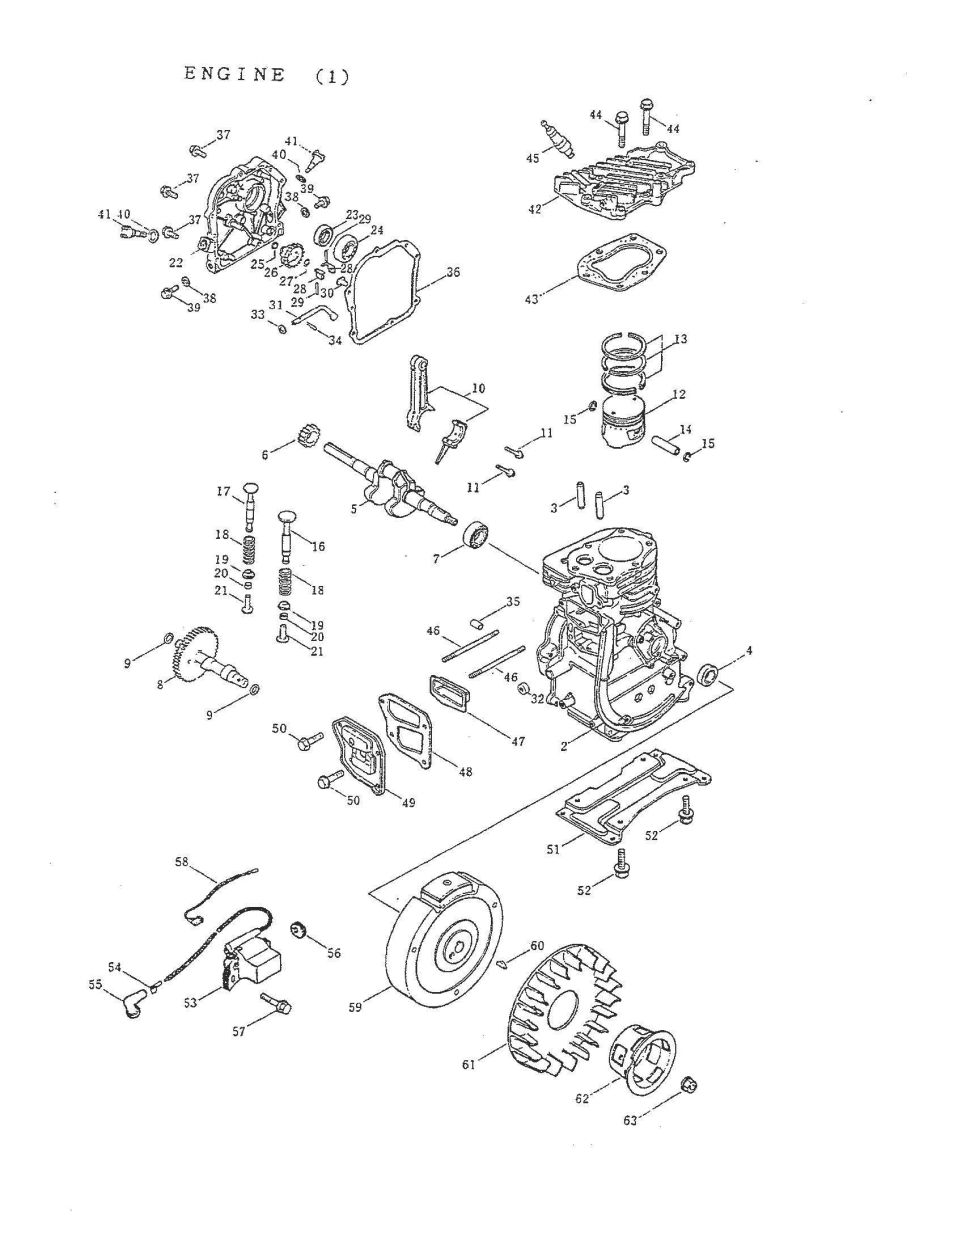 Maruyama Parts Lookup - MS153EMH Parts Diagrams|MS153EMH Engine (1)